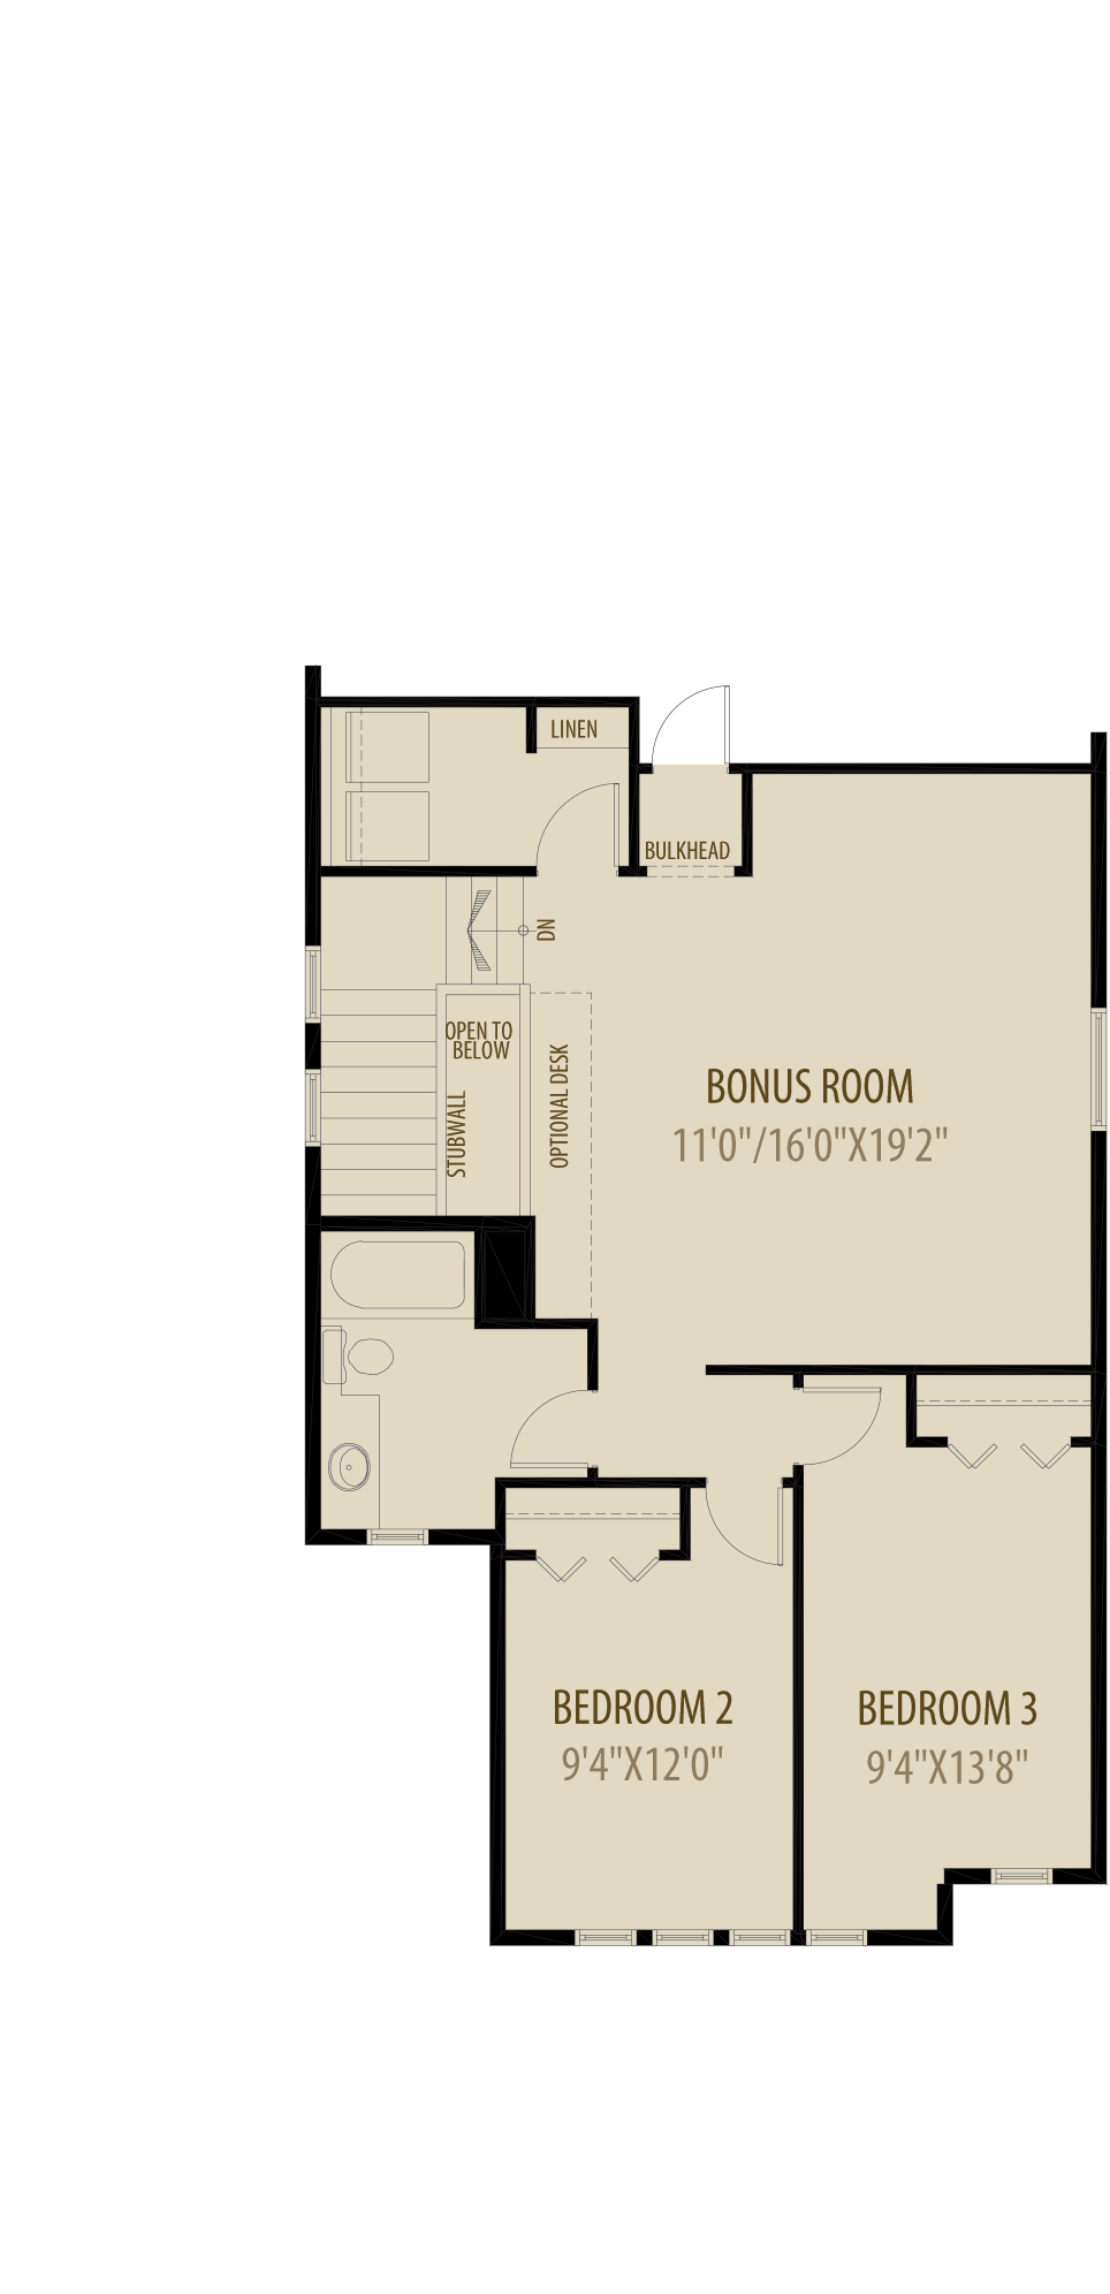 Option 6 Central Bonus Room